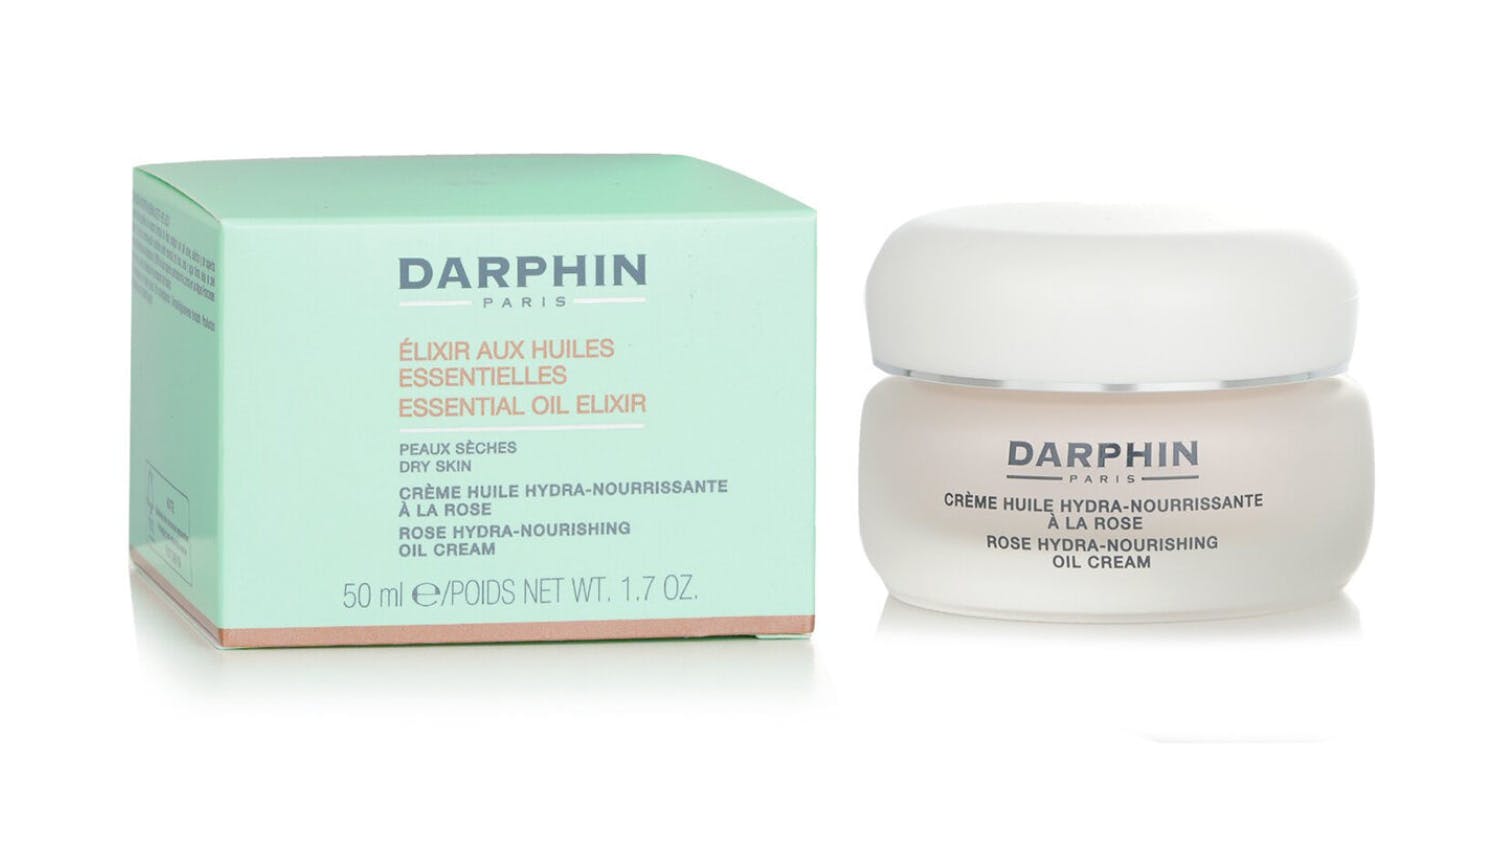 Darphin Essential Oil Elixir Rose Hydra-Nourishing Oil Cream - For Dry Skin - 50ml/1.7oz